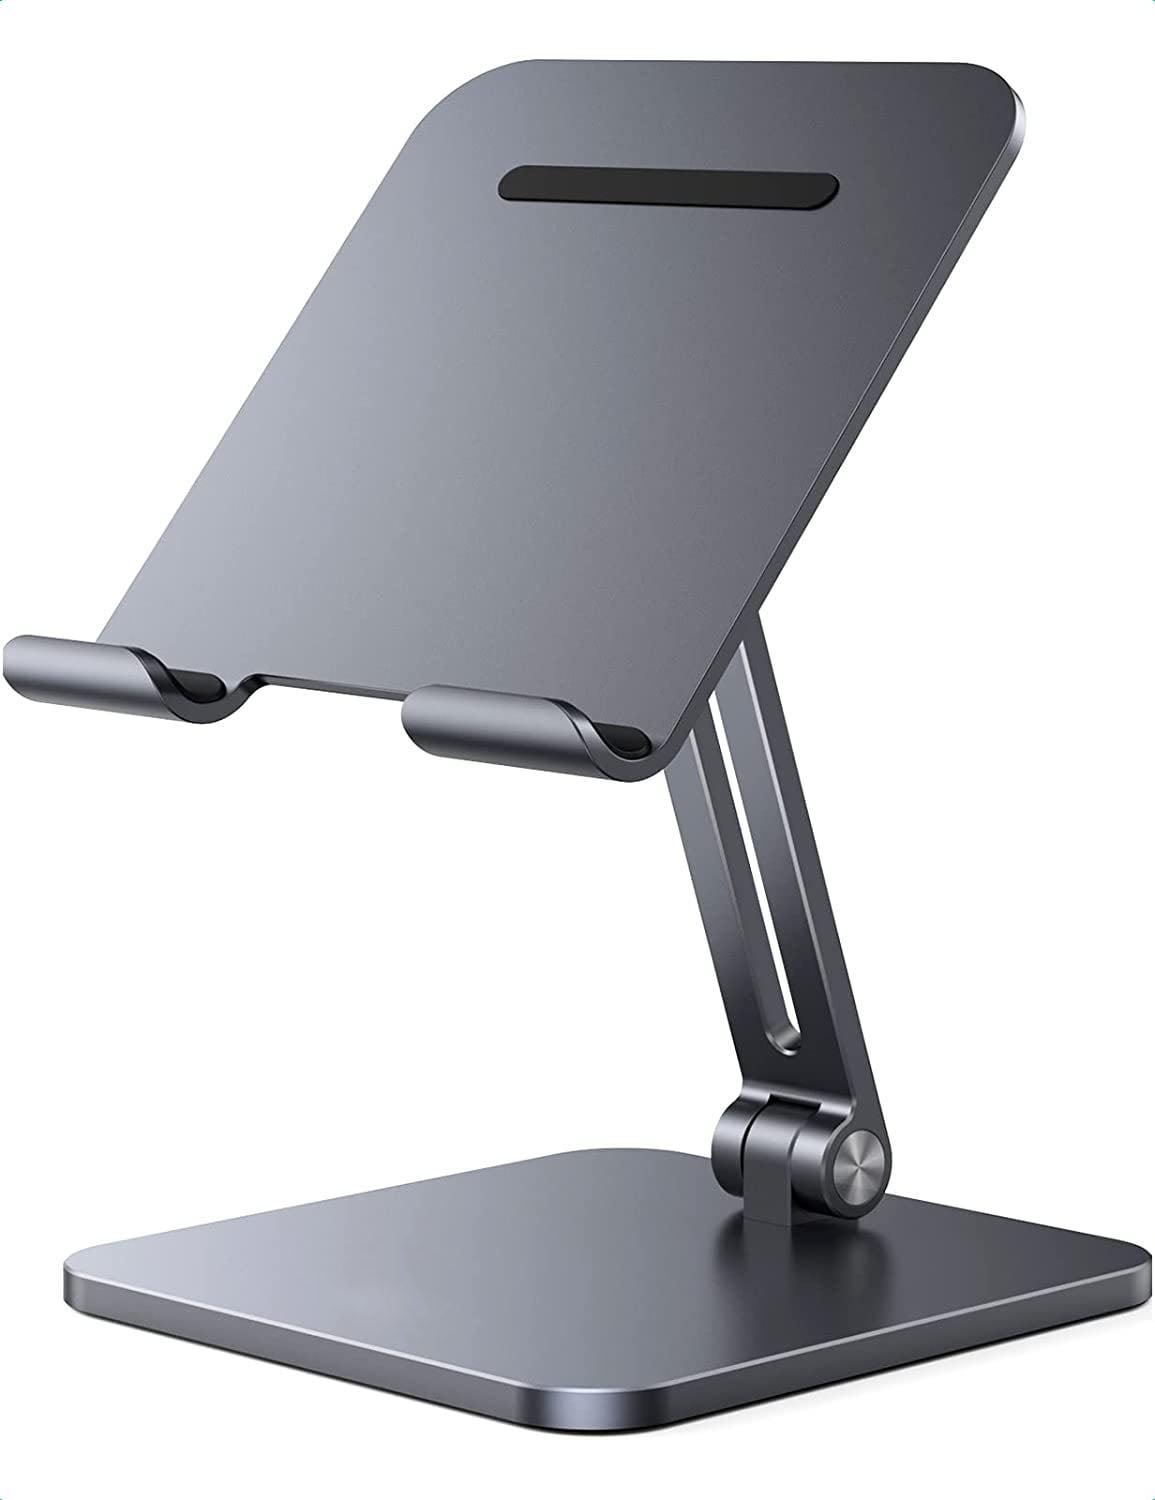 Foldable Tablet Holder ipad Phone Stands 3-in-1 Portable Adjustable Macbook Holder Laptop Stand for Desk Facetime Aluminum Alloy Silver Stand